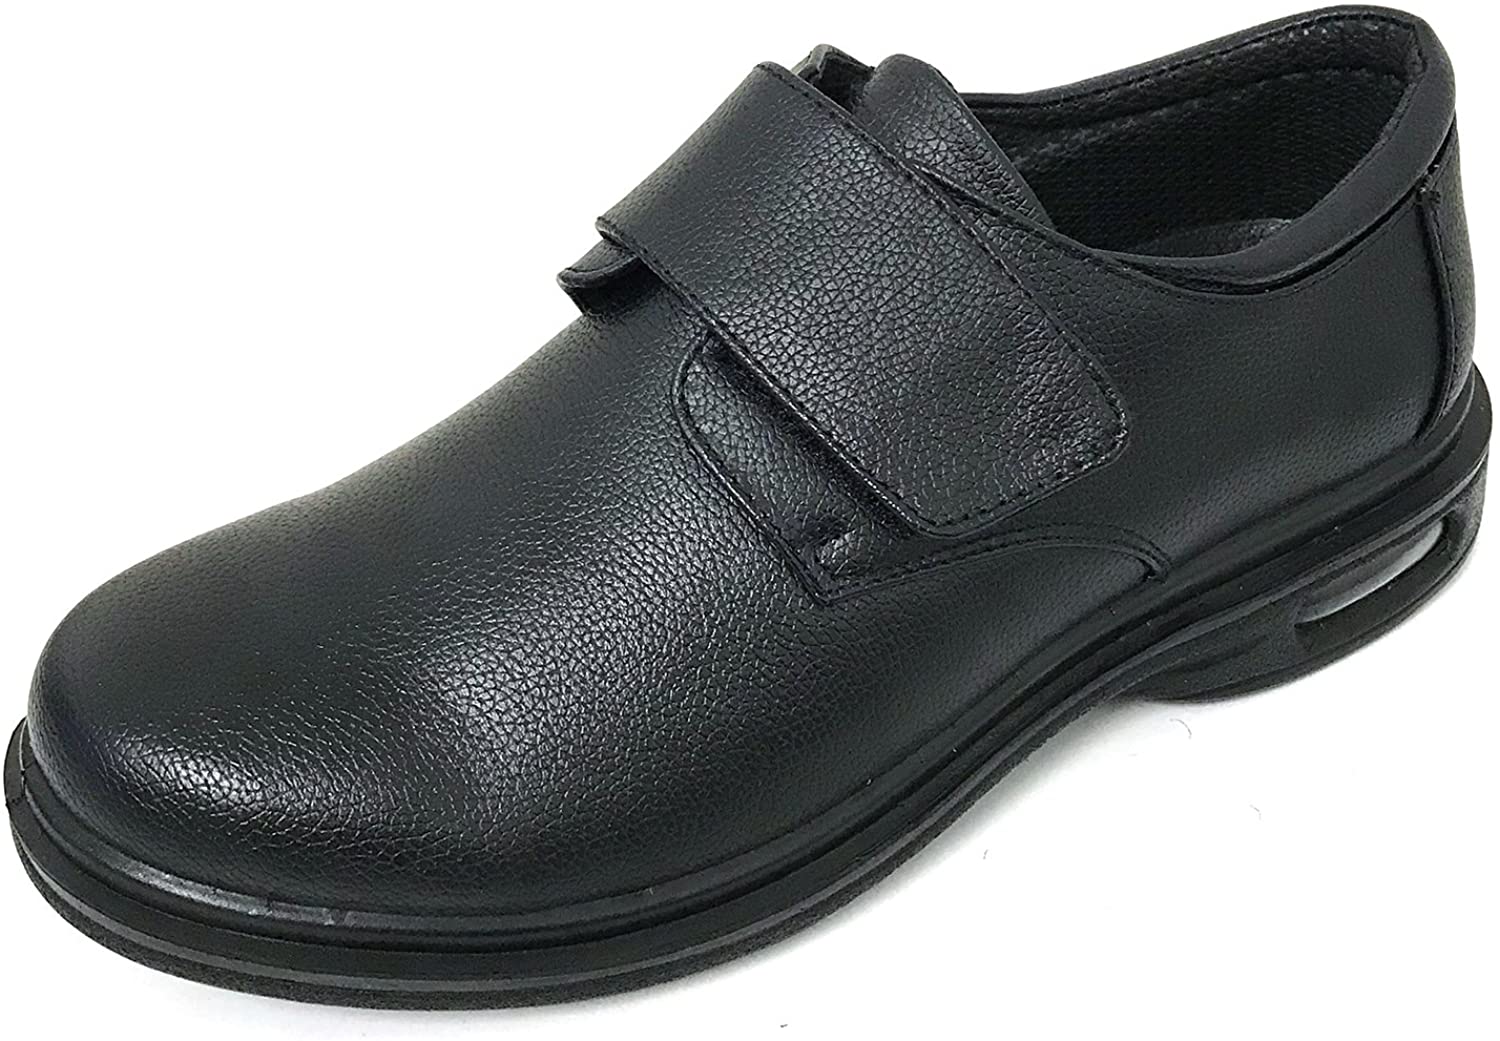 Men's Comfort Shoes Hook and Loop Air Cushion Slip Resistant Walking Restaurant Work Shoes - image 1 of 3